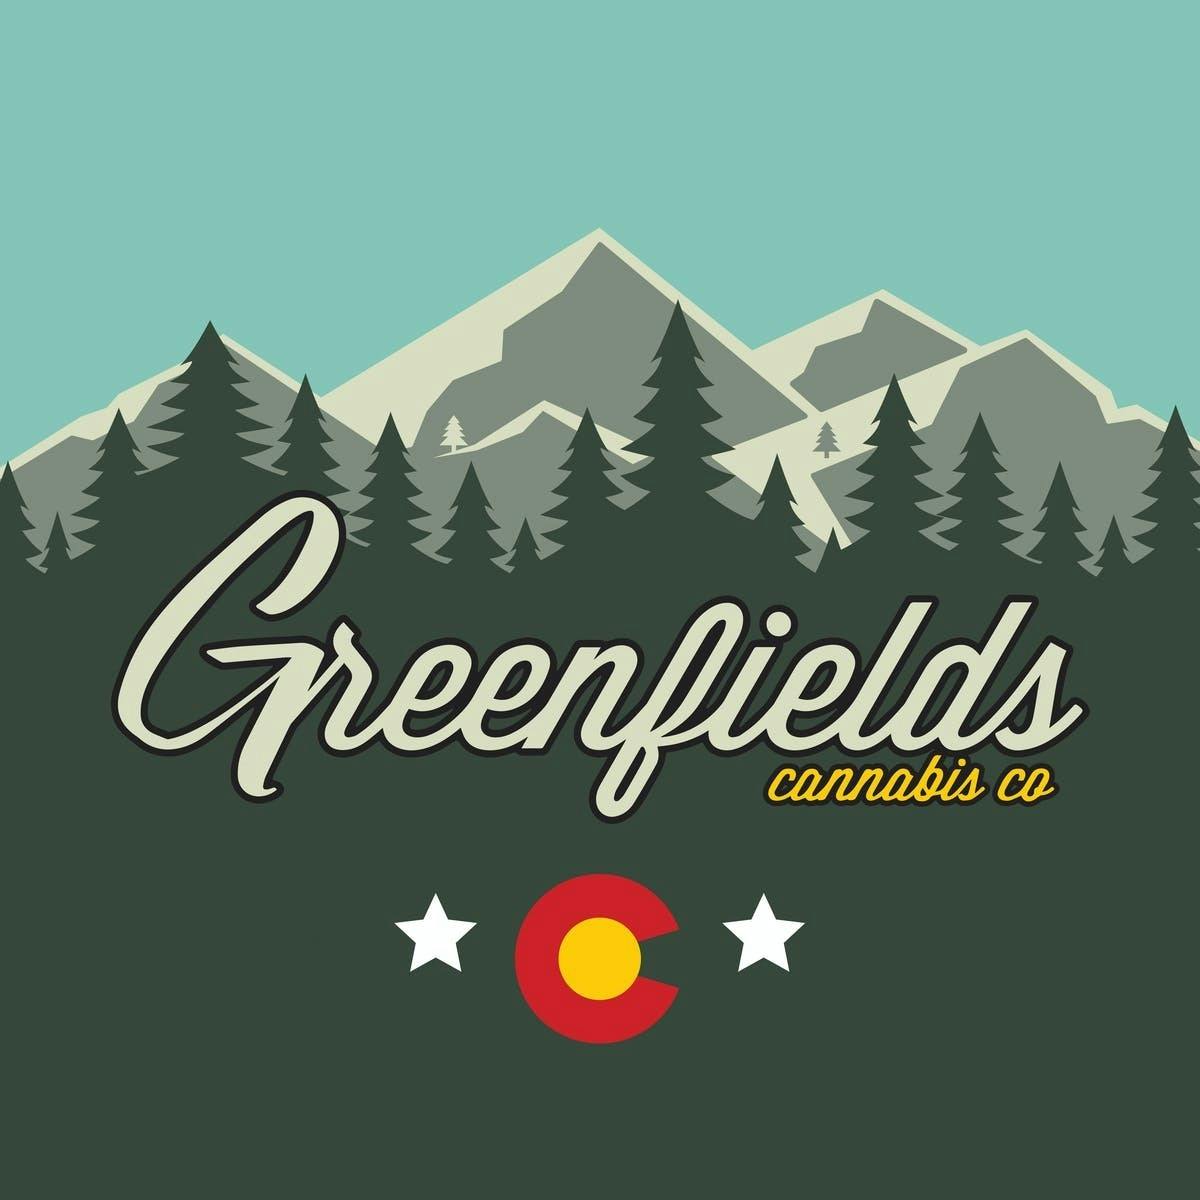 Greenfields Cannabis Co-logo